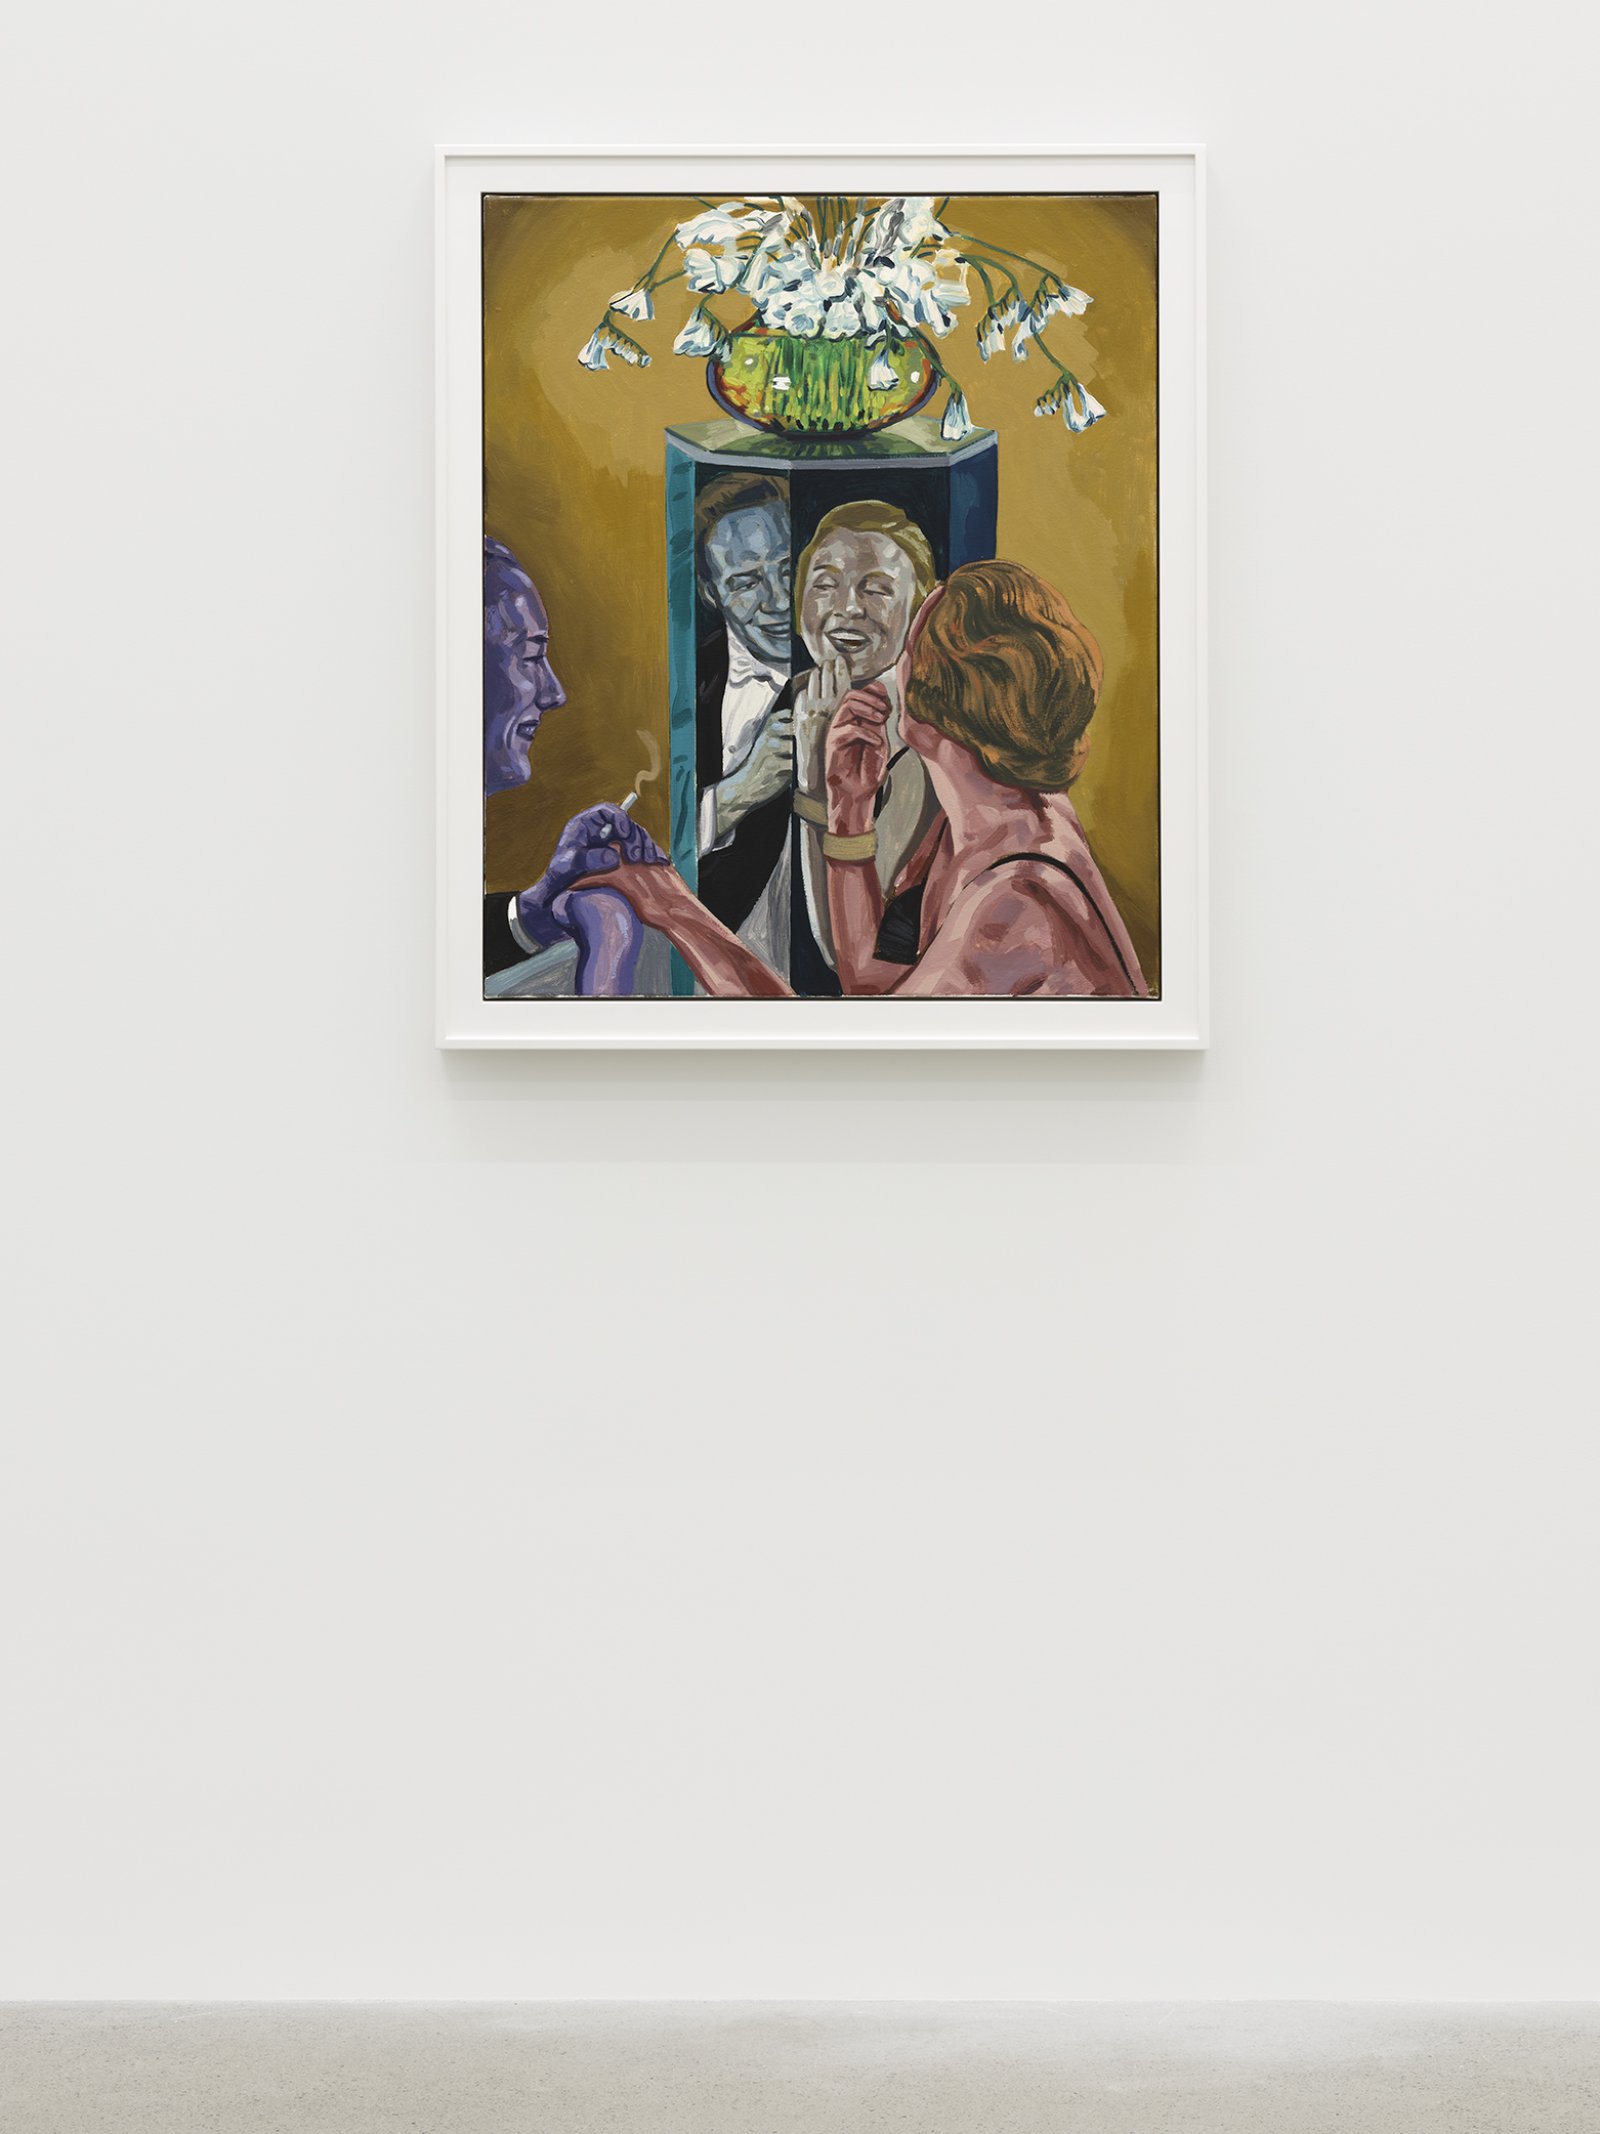 ​Damian Moppett, Man and Woman in Mirror, 2020, oil on canvas, 36 x 31 in. (92 x 79 cm) by Damian Moppett